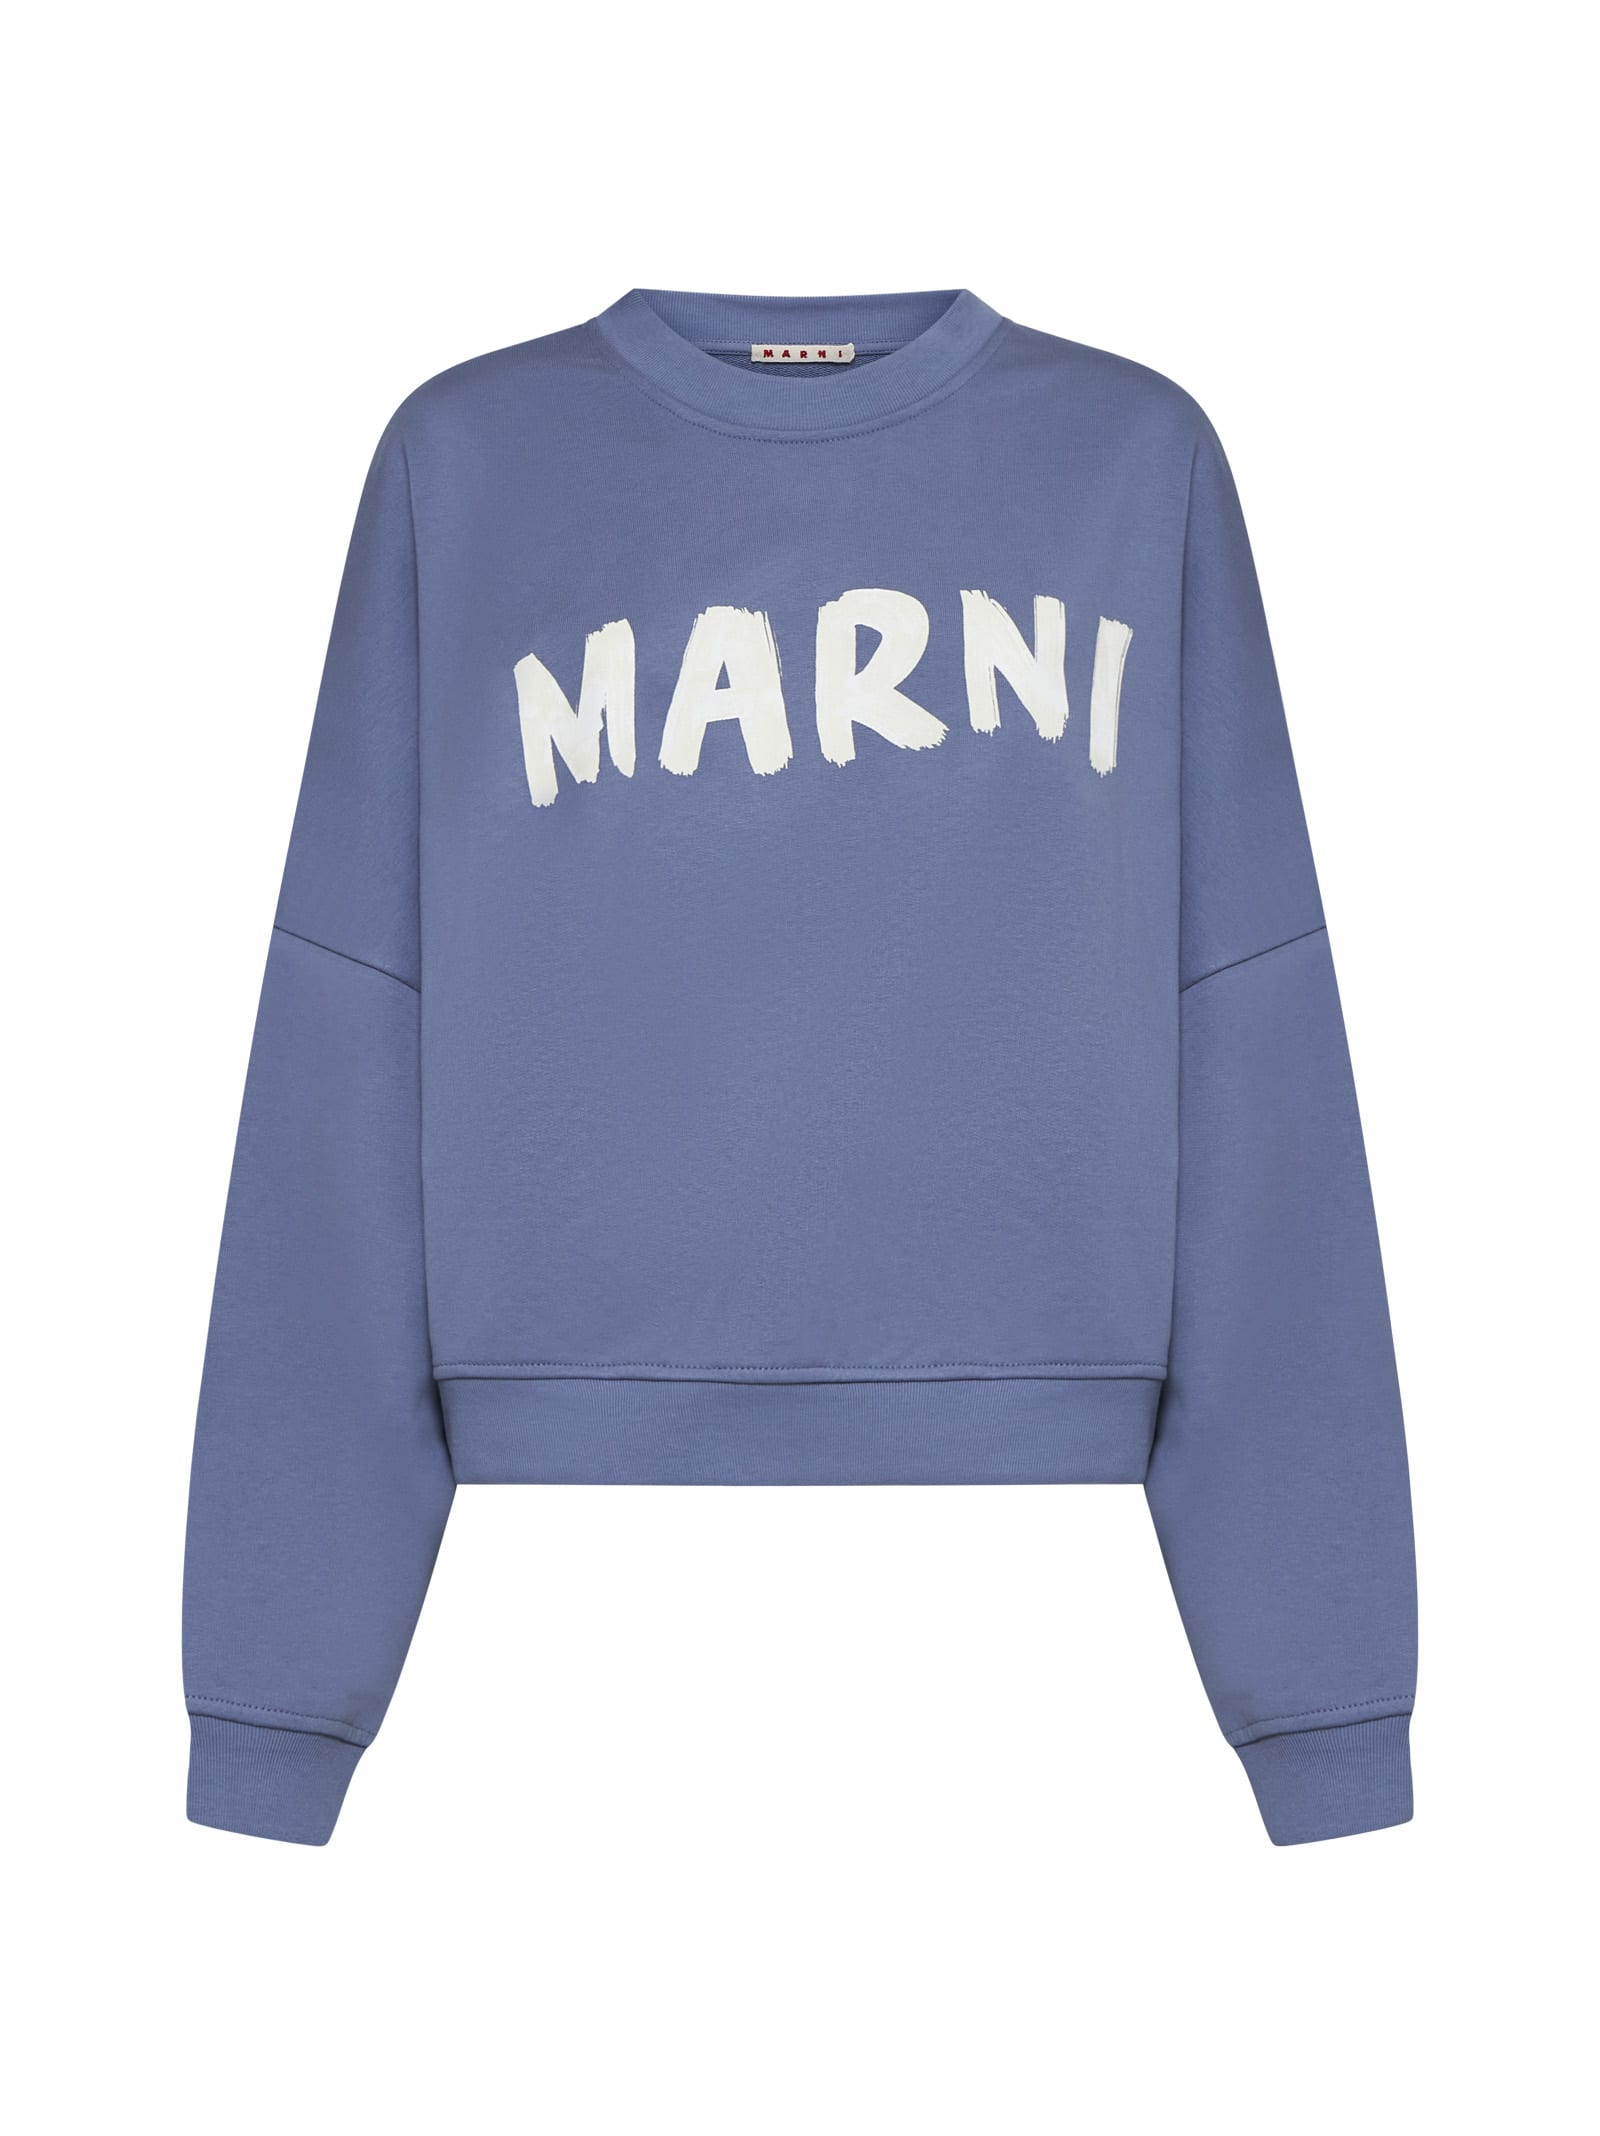 Marni Sweater In Blue